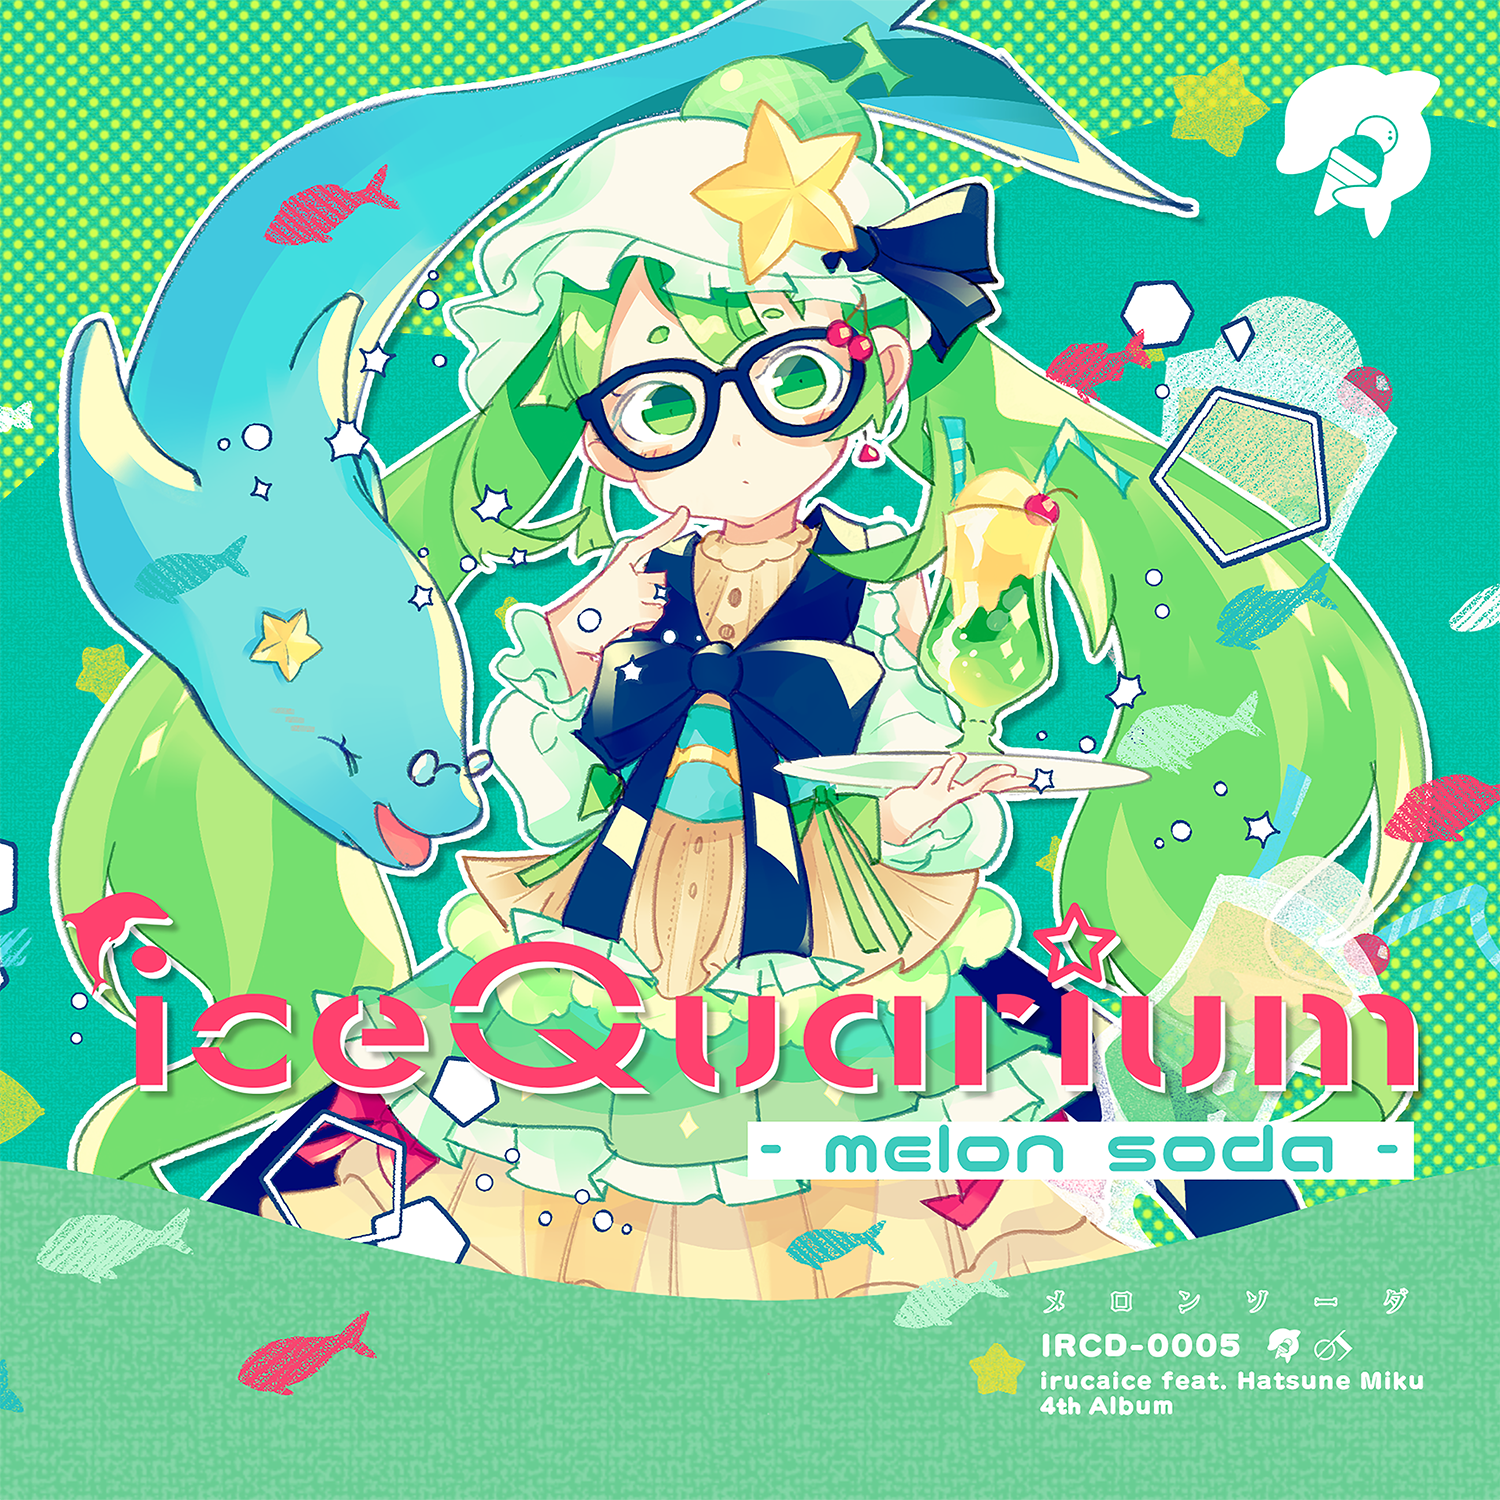 irucaice featuring Hatsune Miku — Melon Melody Träumerei cover artwork